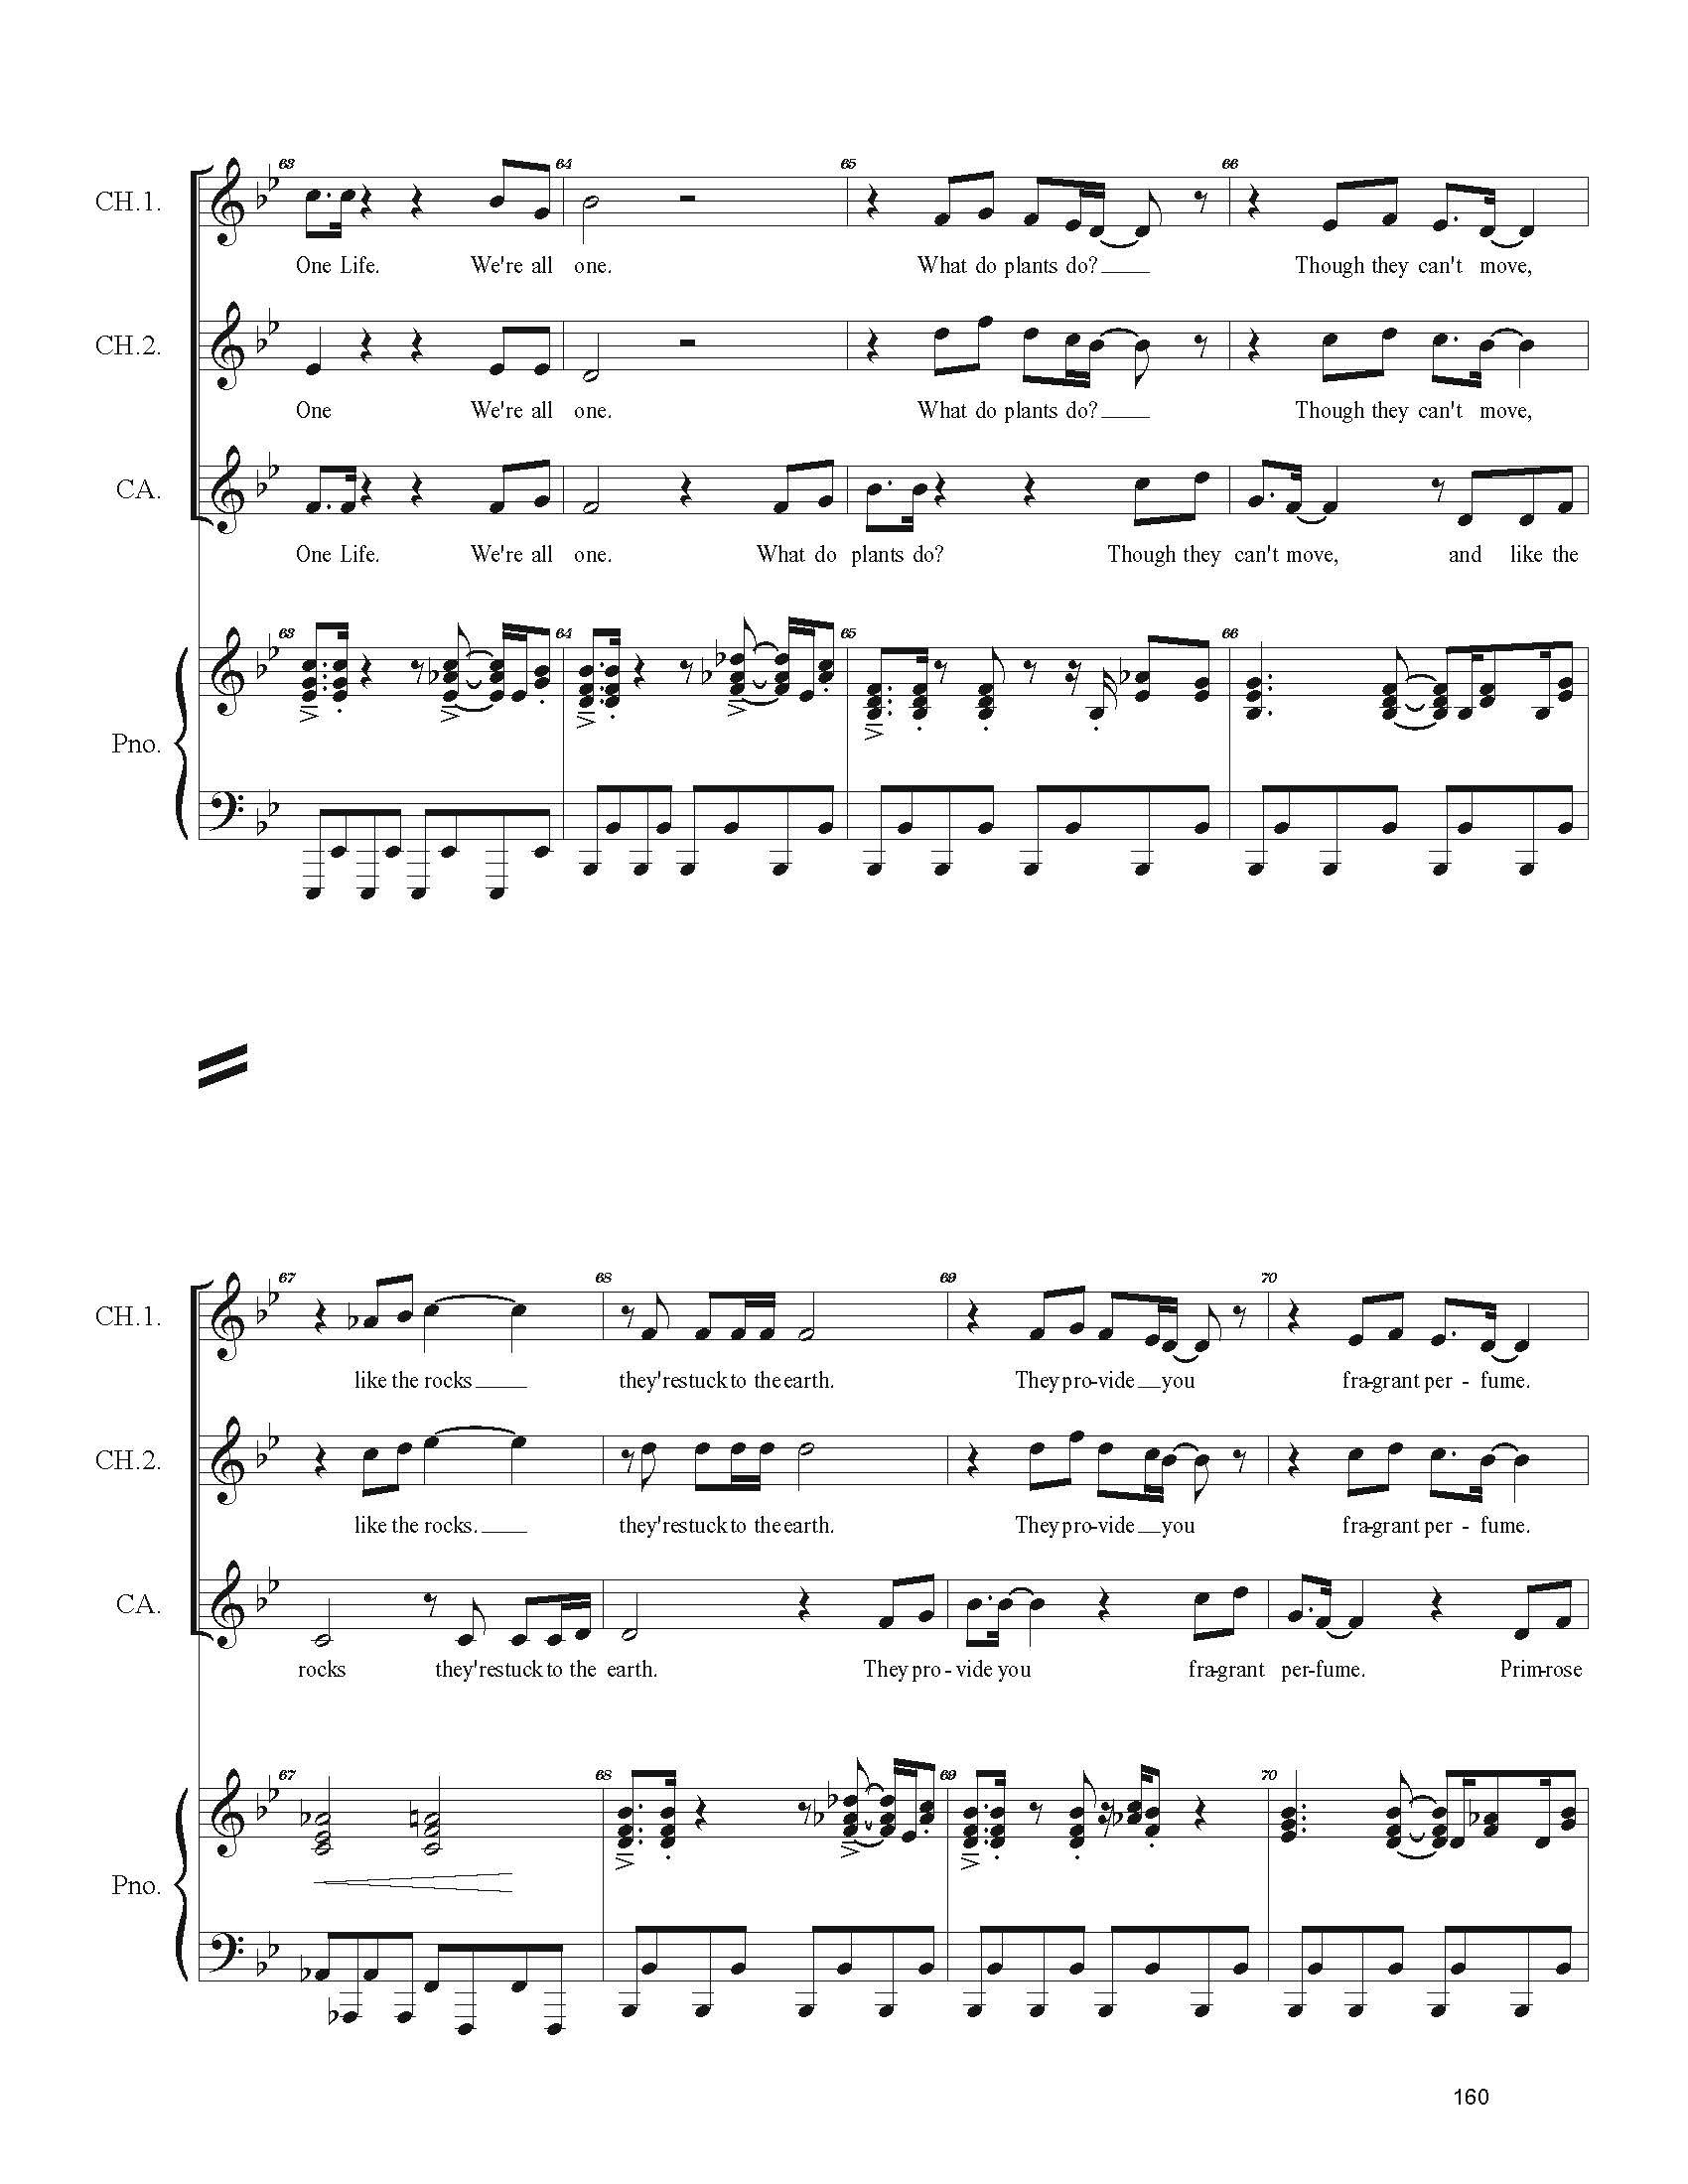 FULL PIANO VOCAL SCORE DRAFT 1 - Score_Page_160.jpg